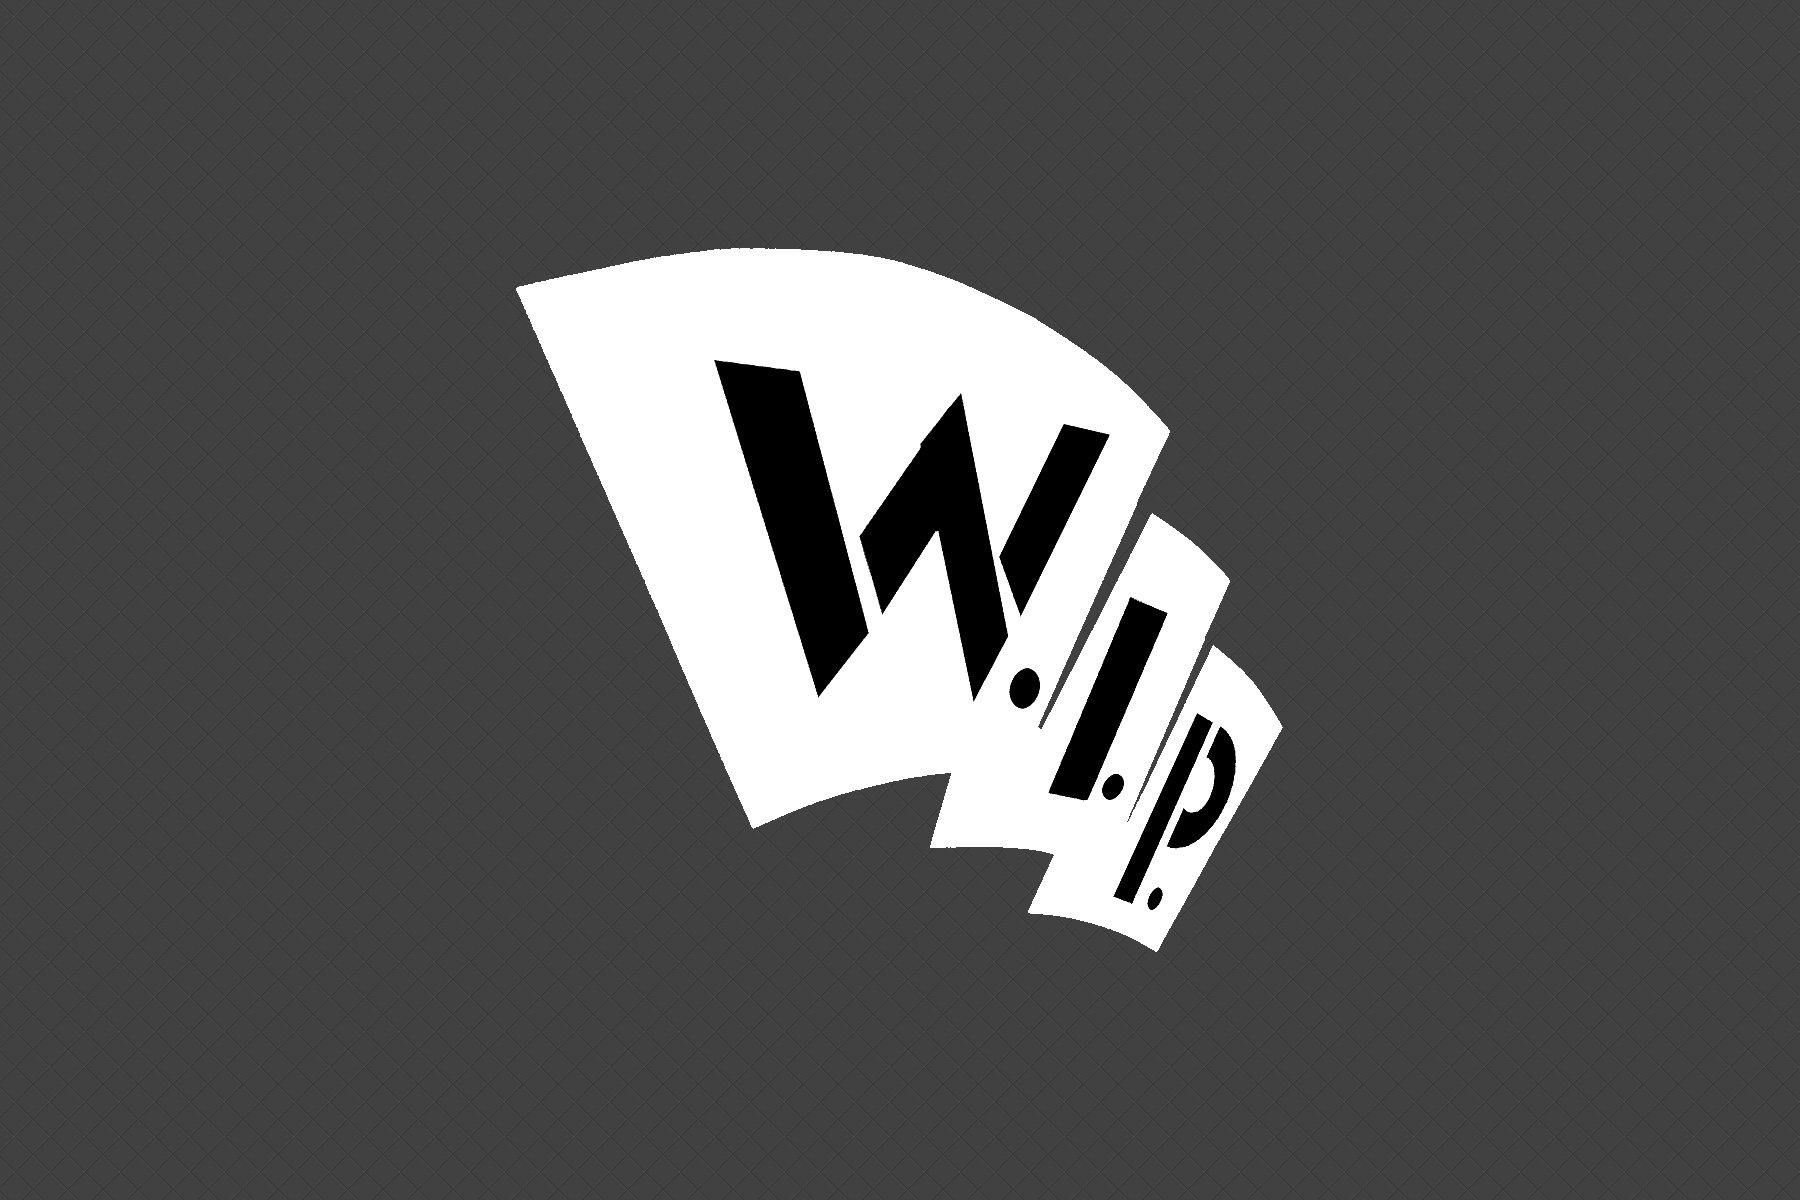 W.I.P. Productions – work in progress